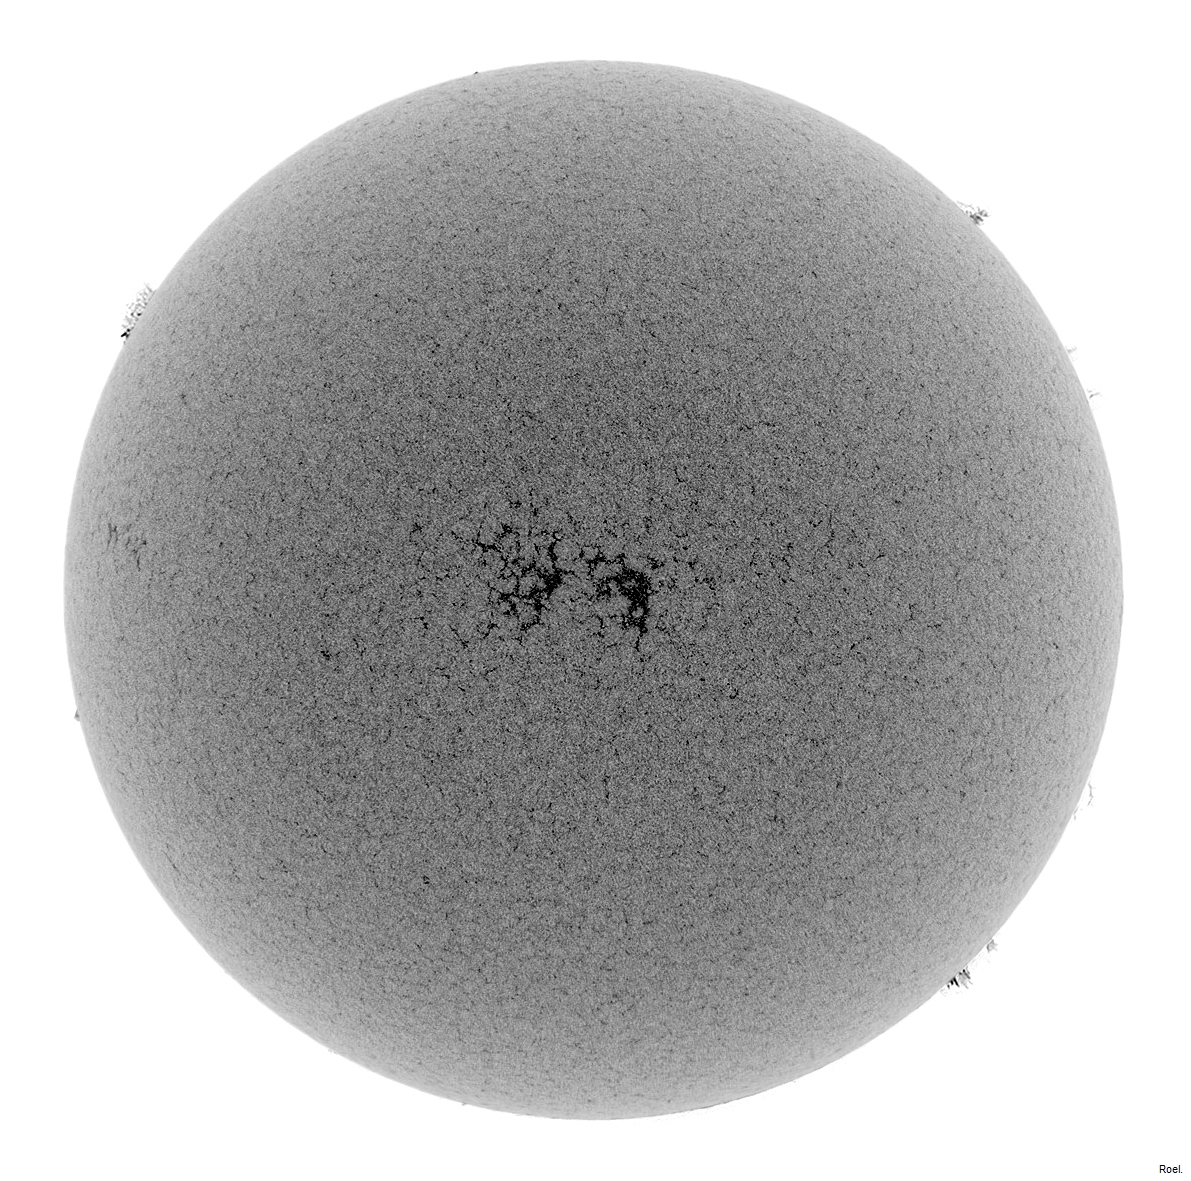 Sol del 14 de julio de 2018-Meade-CaK-PSTmod-1neg.jpg